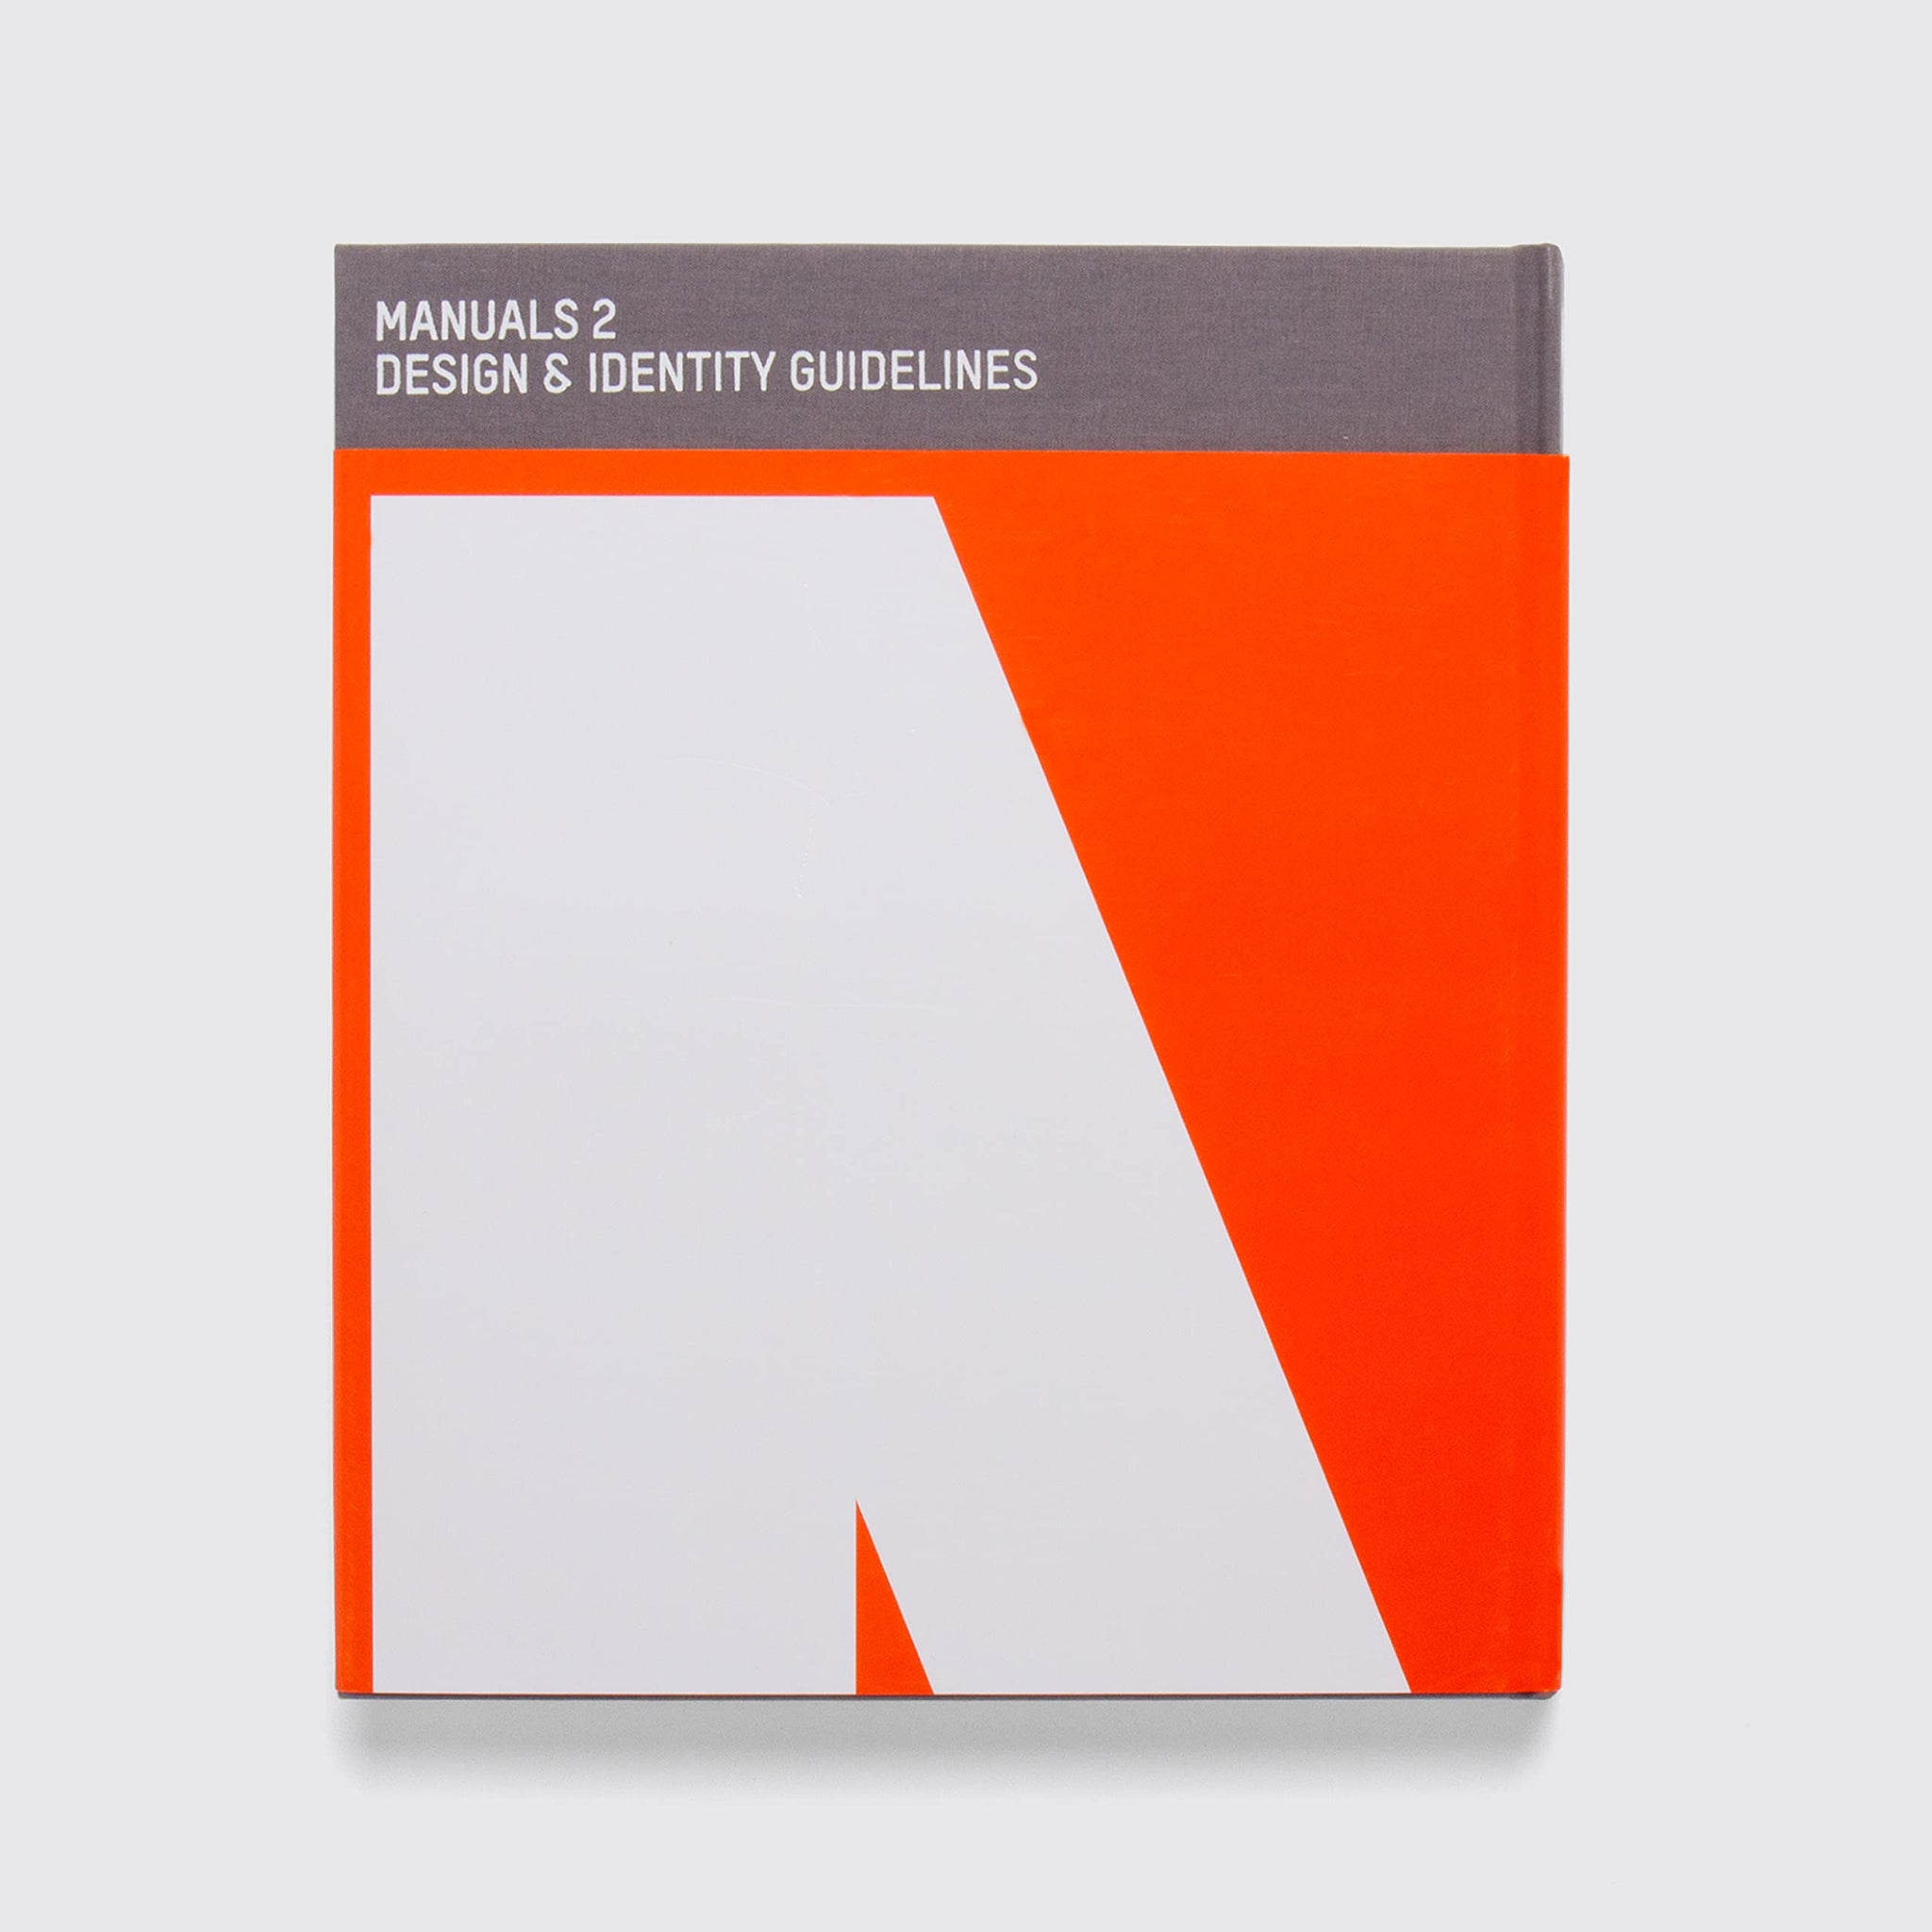 Manuals 2 Design & Identity Guidelines